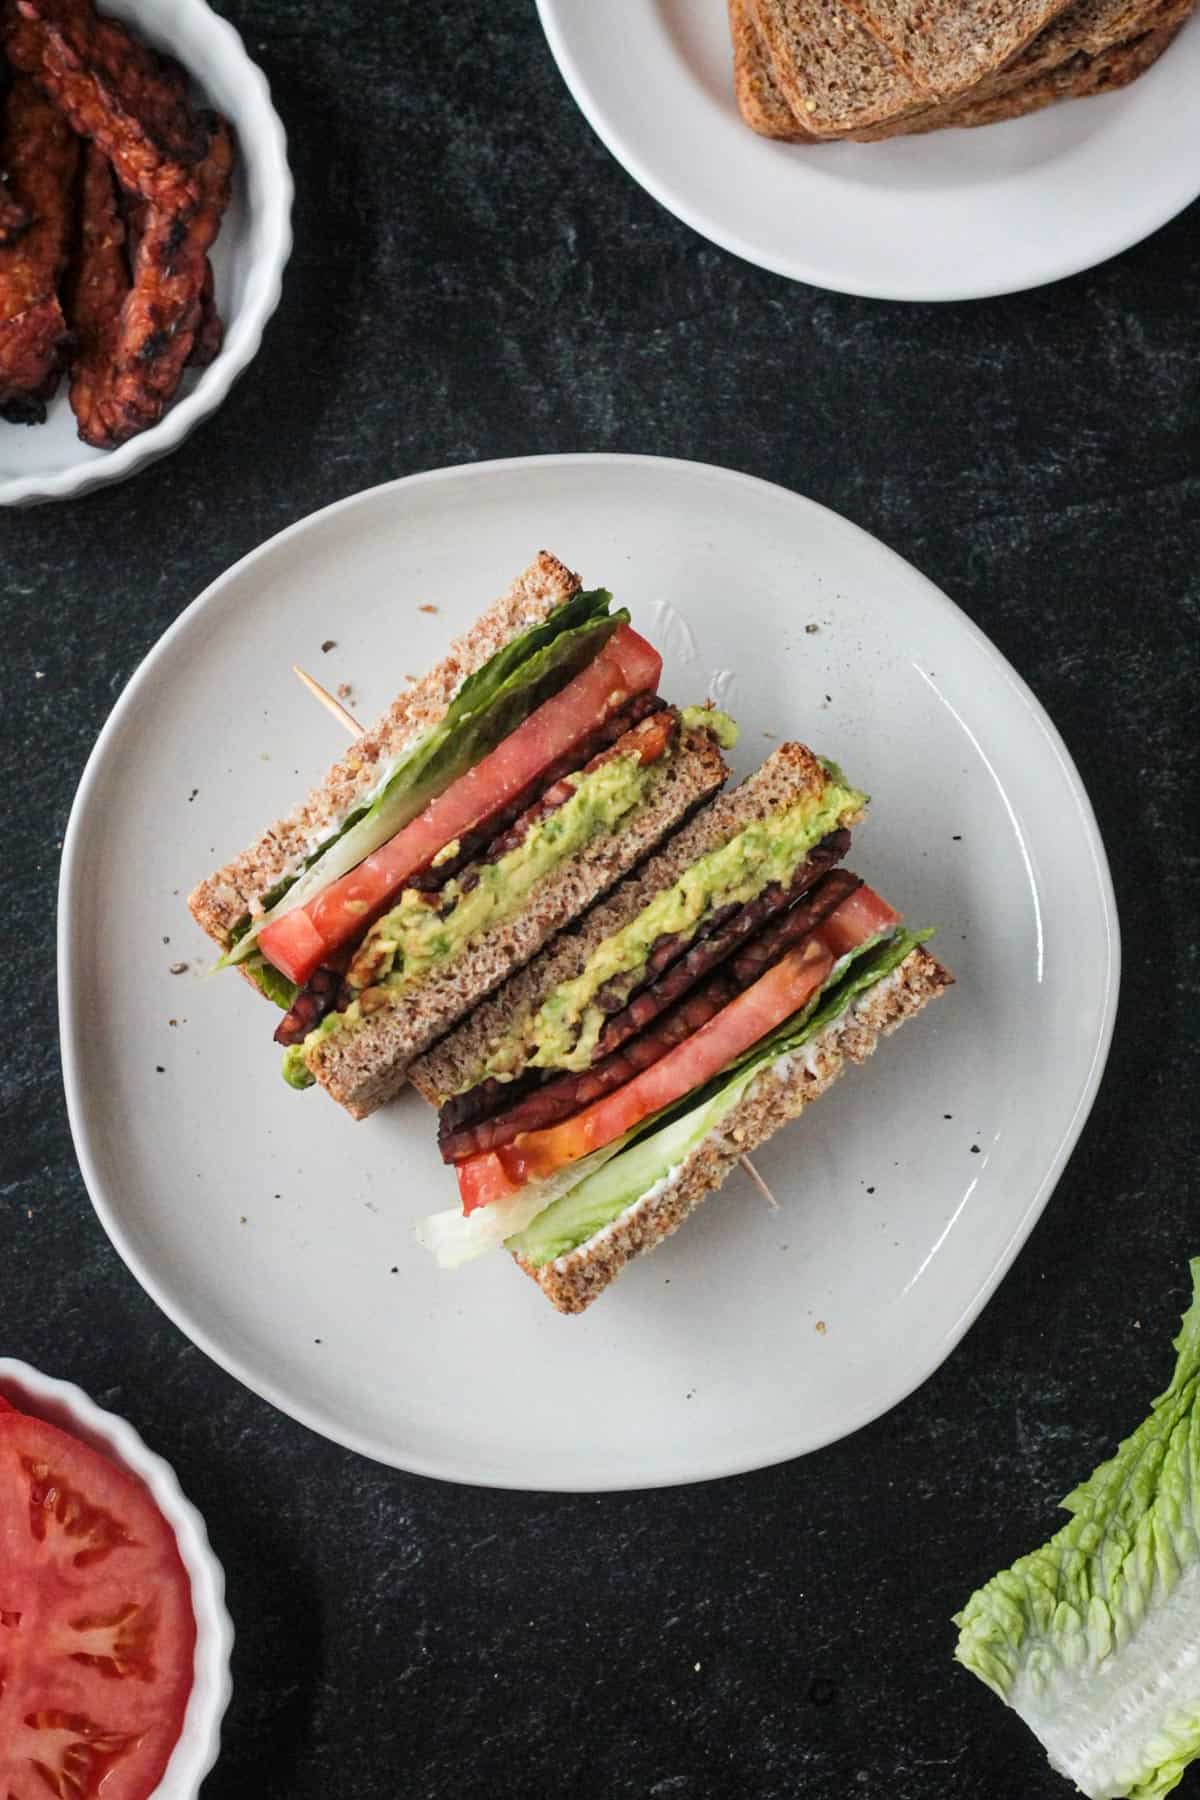 Two halves of a vegan blt sandwich on a plate.